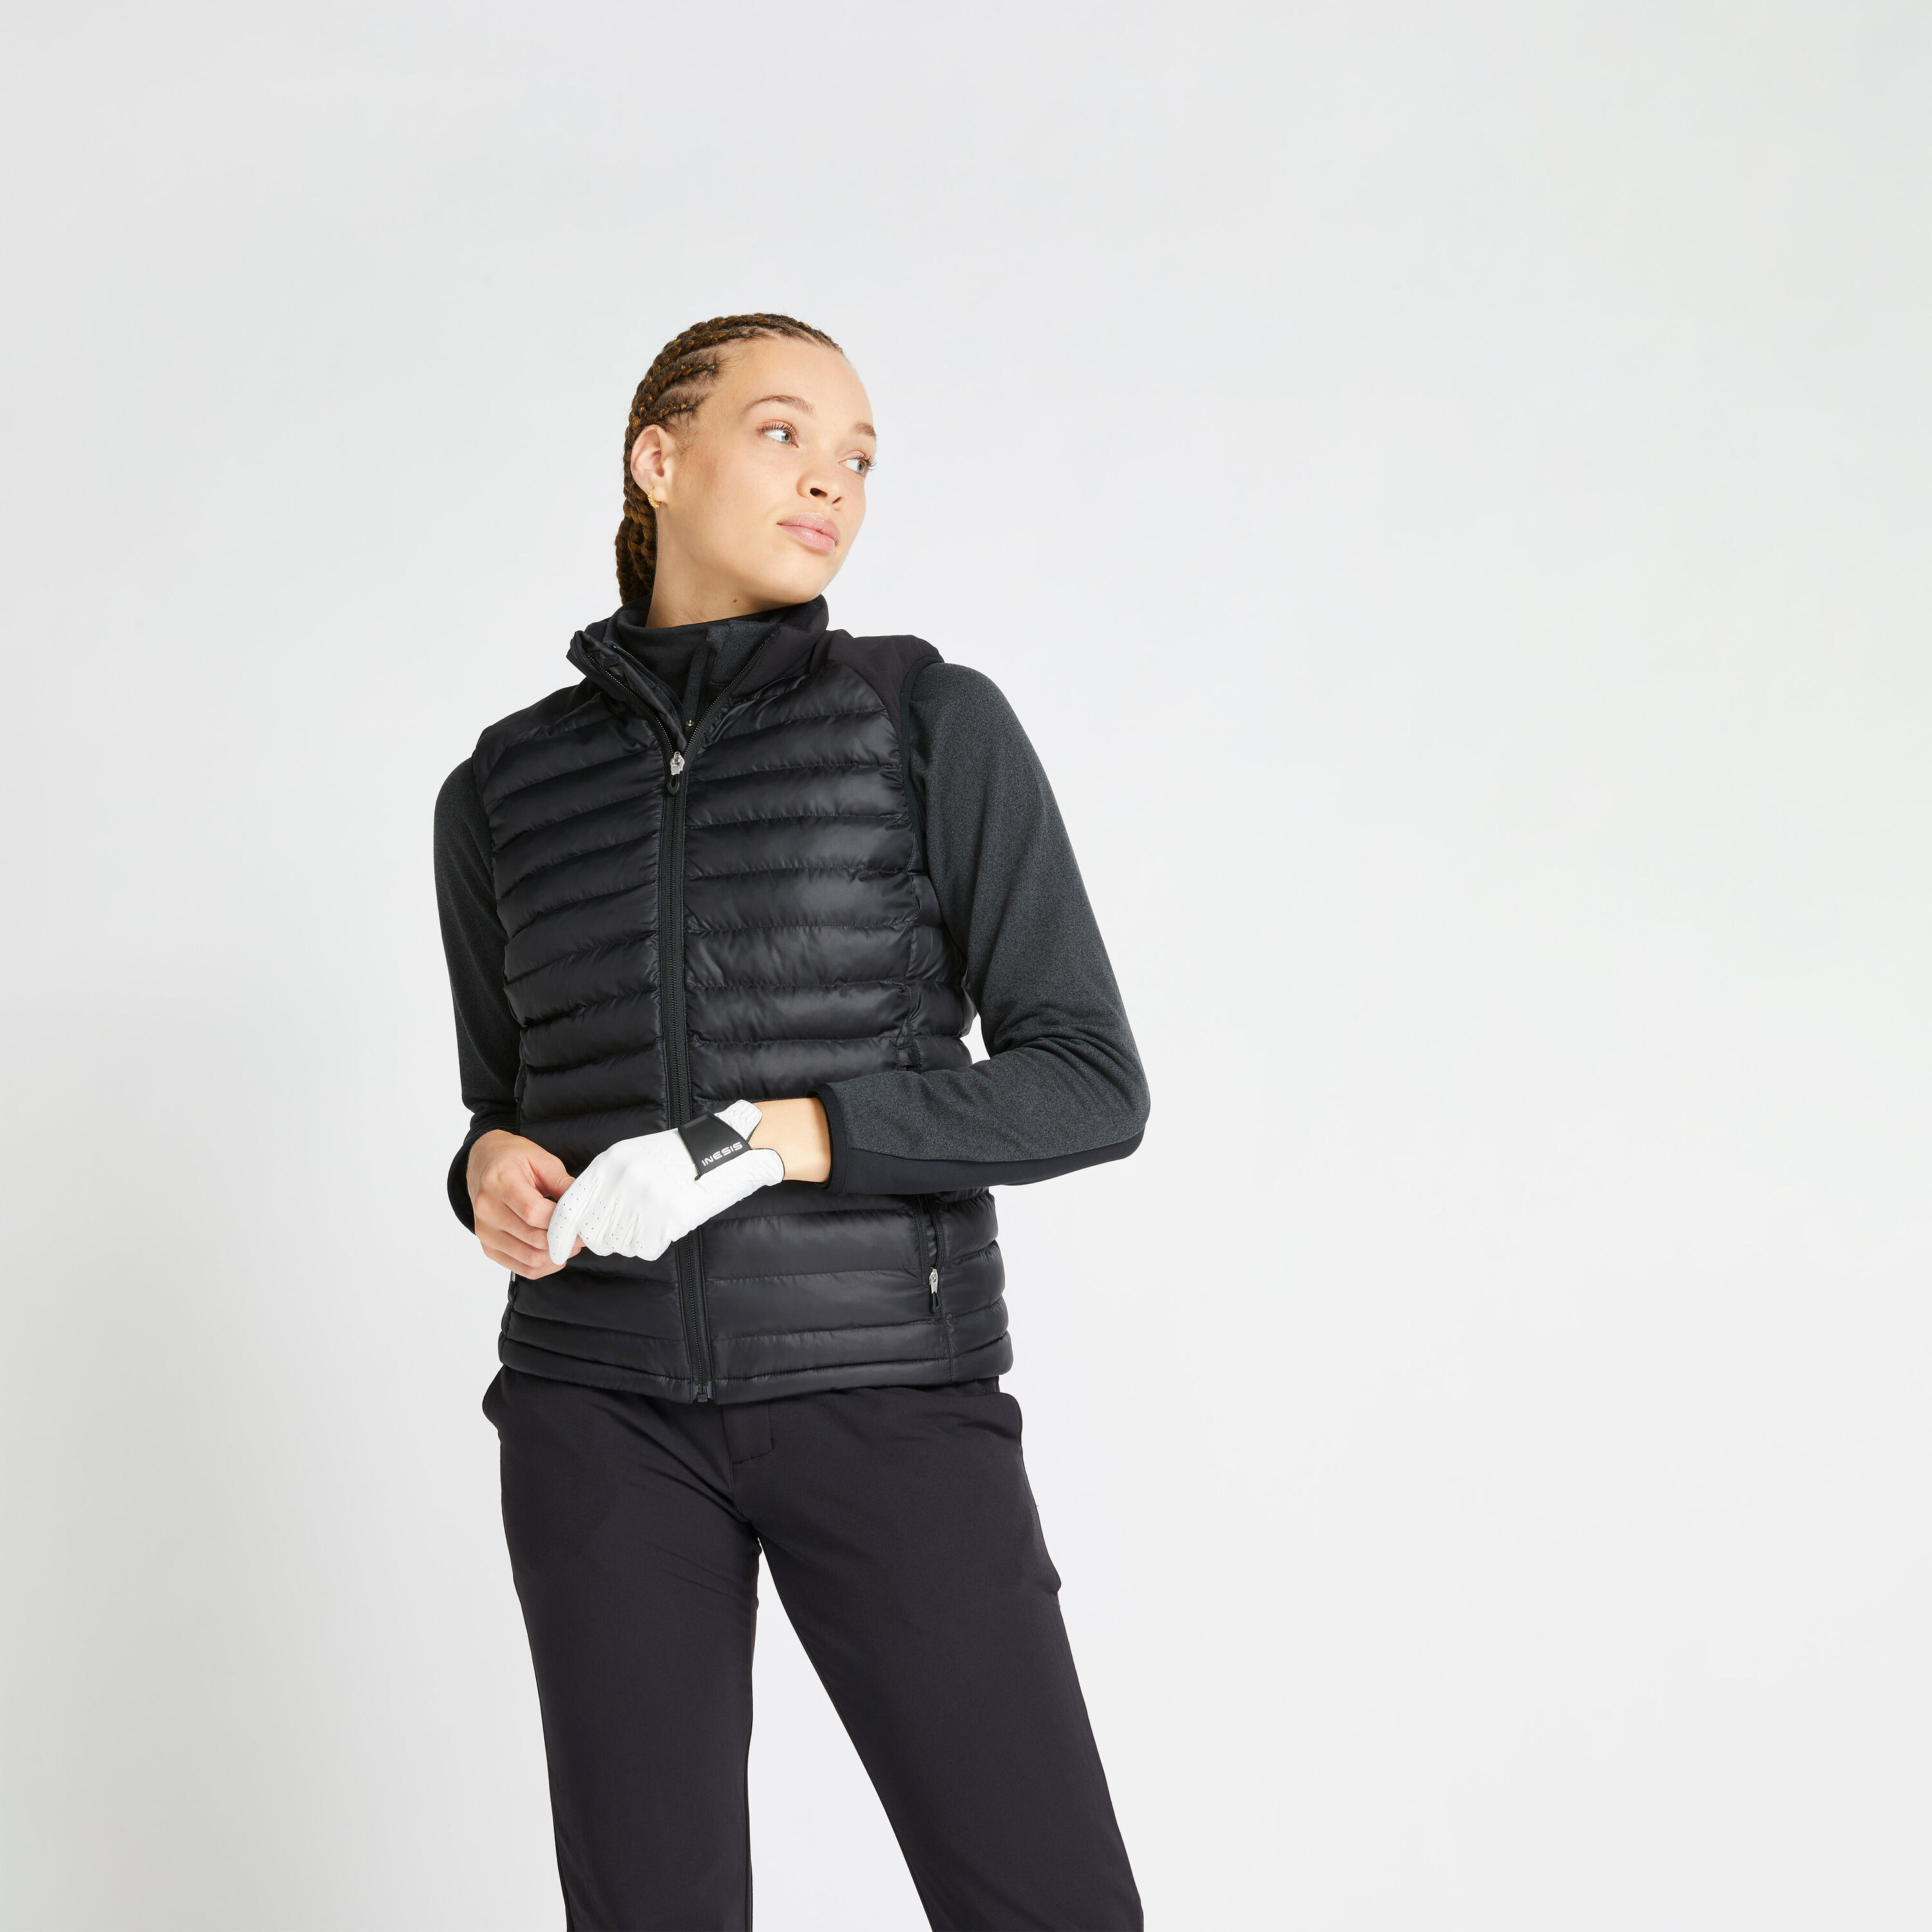 INESIS Women's golf winter sleeveless padded jacket CW500 black